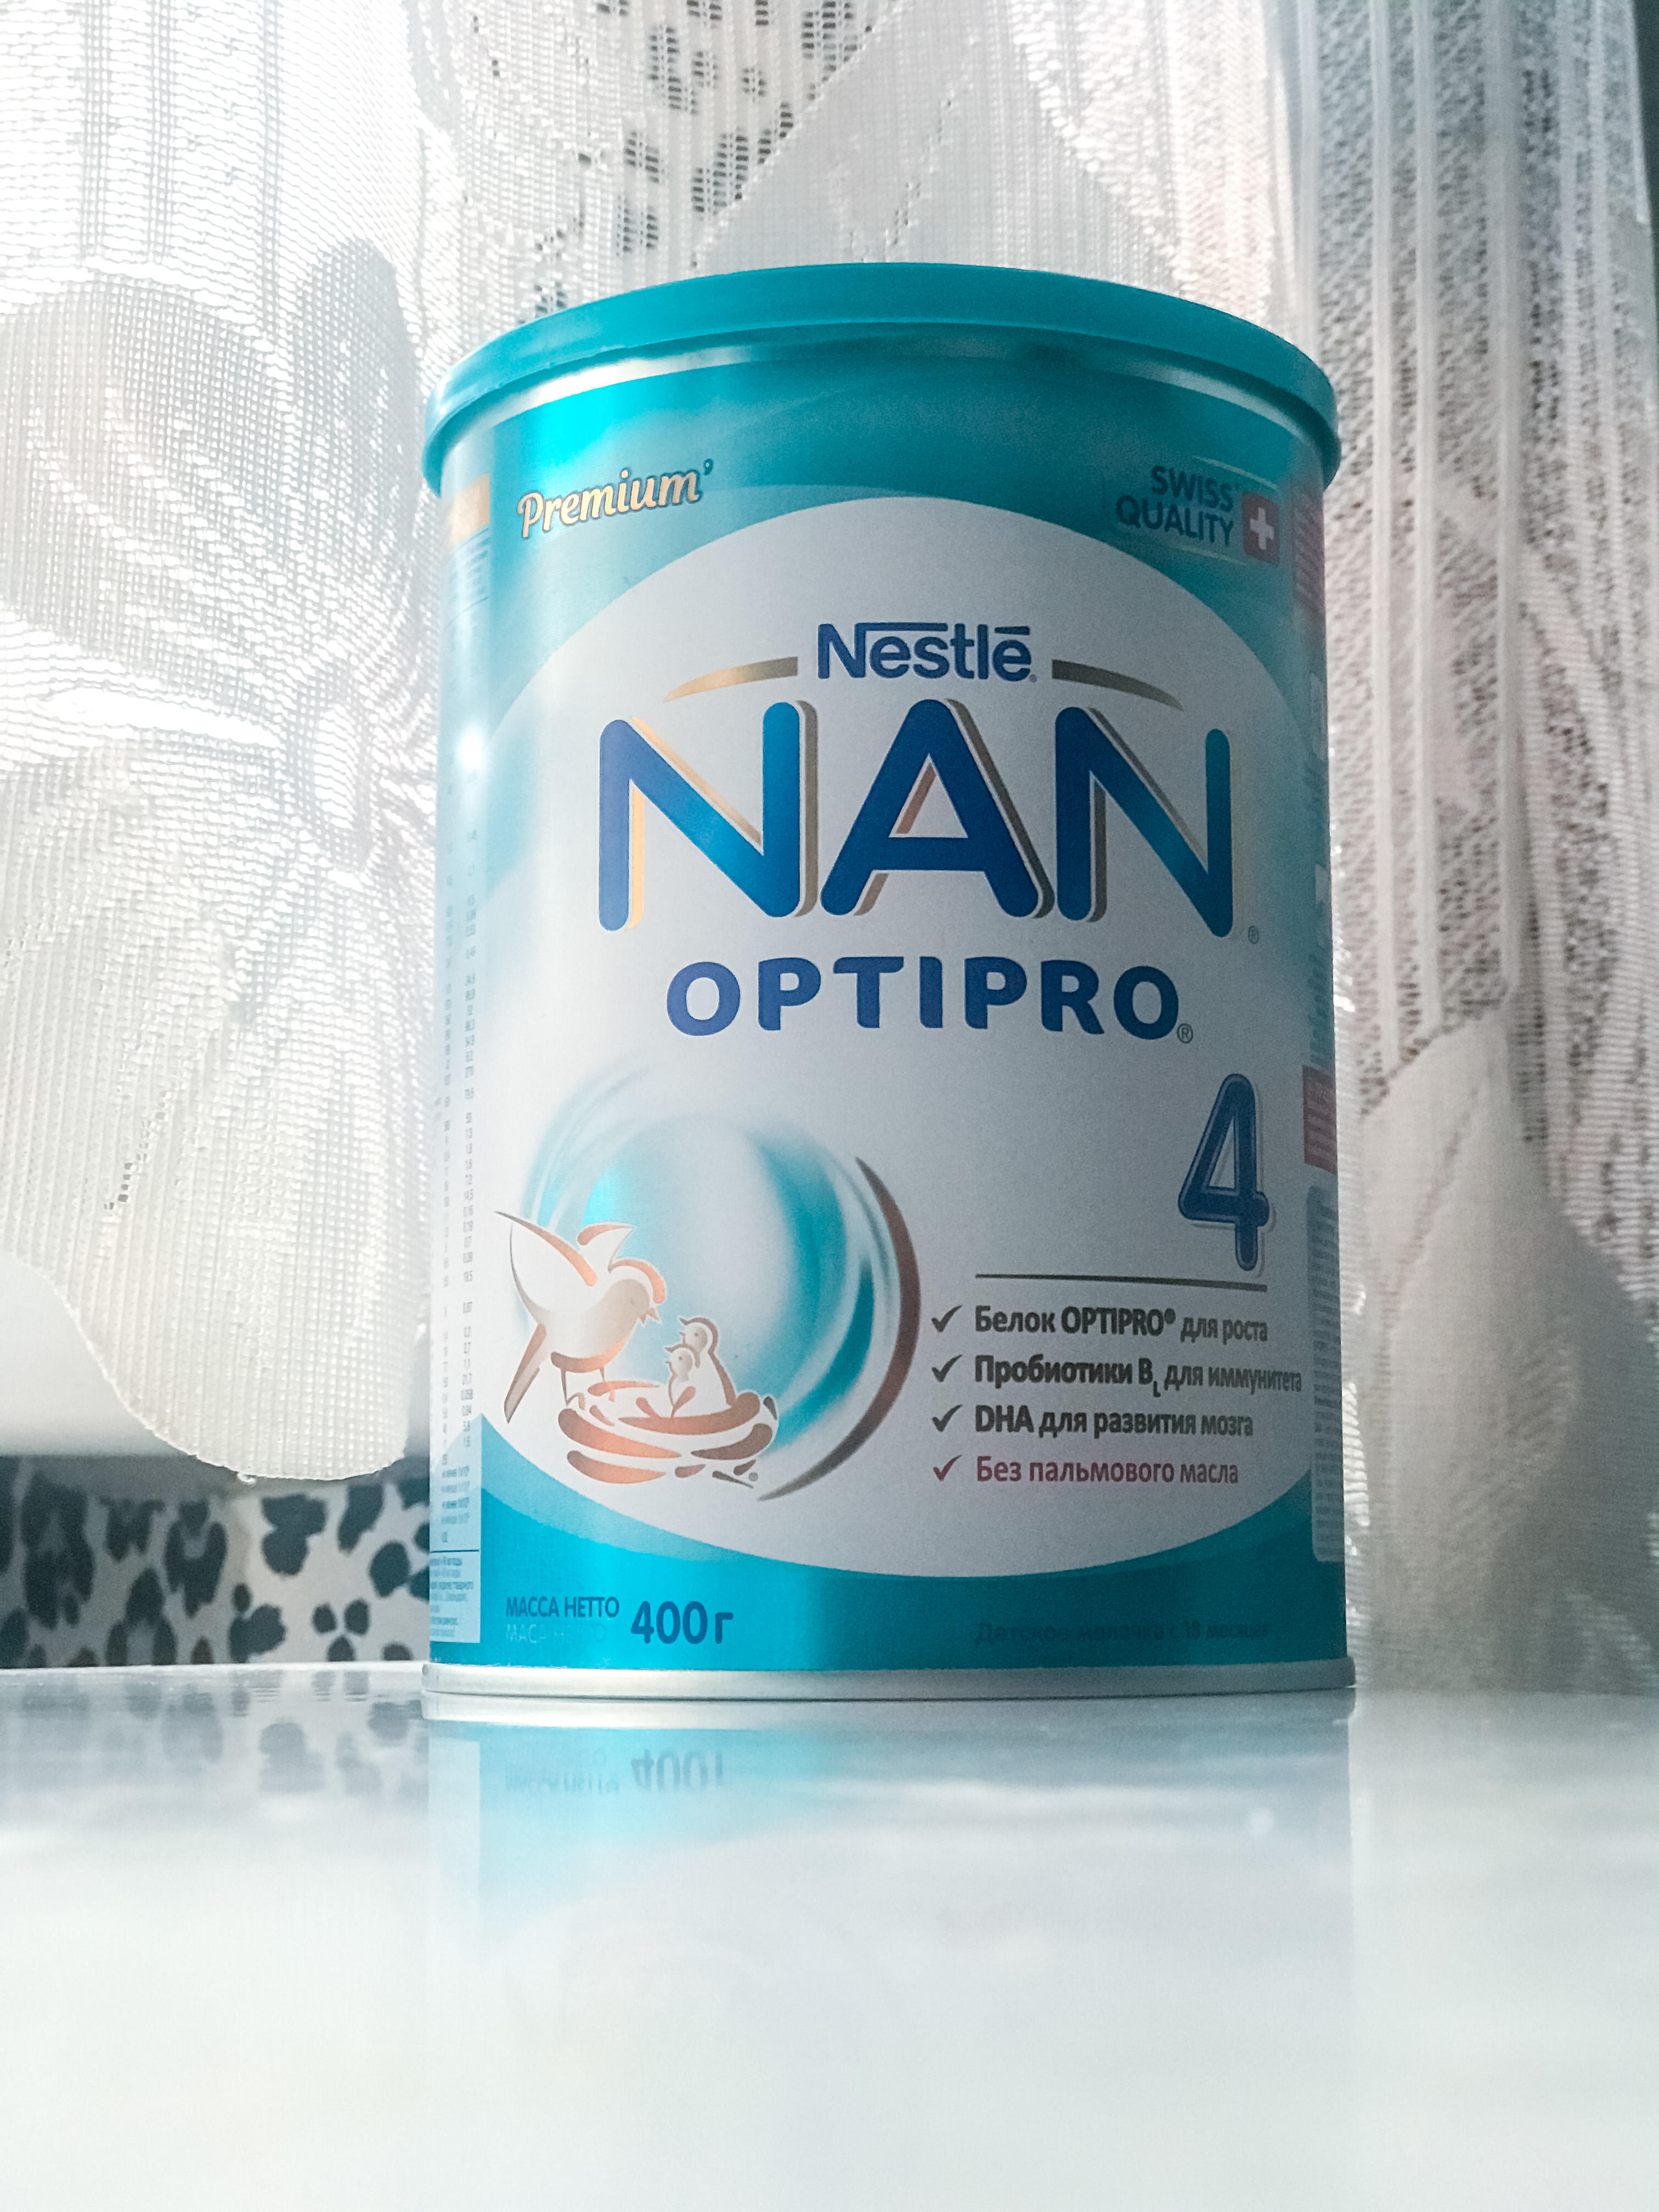 Нан 4. Nan Optipro 4. Нестле нан оптипро. Смесь Nestle nan 4. Молочная смесь Нестле.